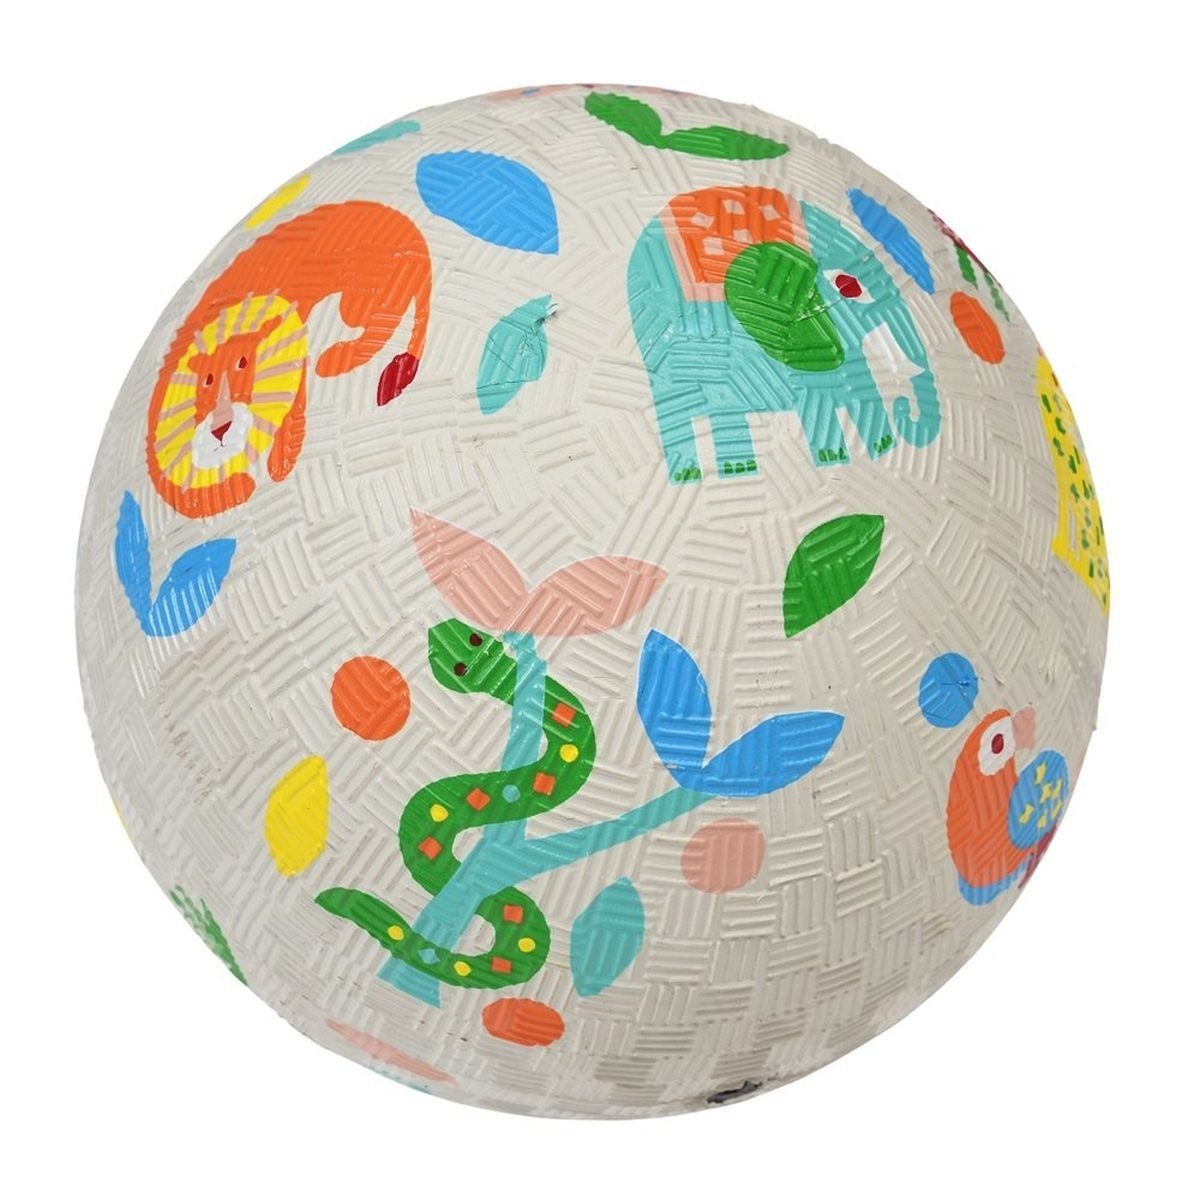 London Spielball 12,5cm Ball Wild Kinder Wonders Spielball Kautschuk Rex